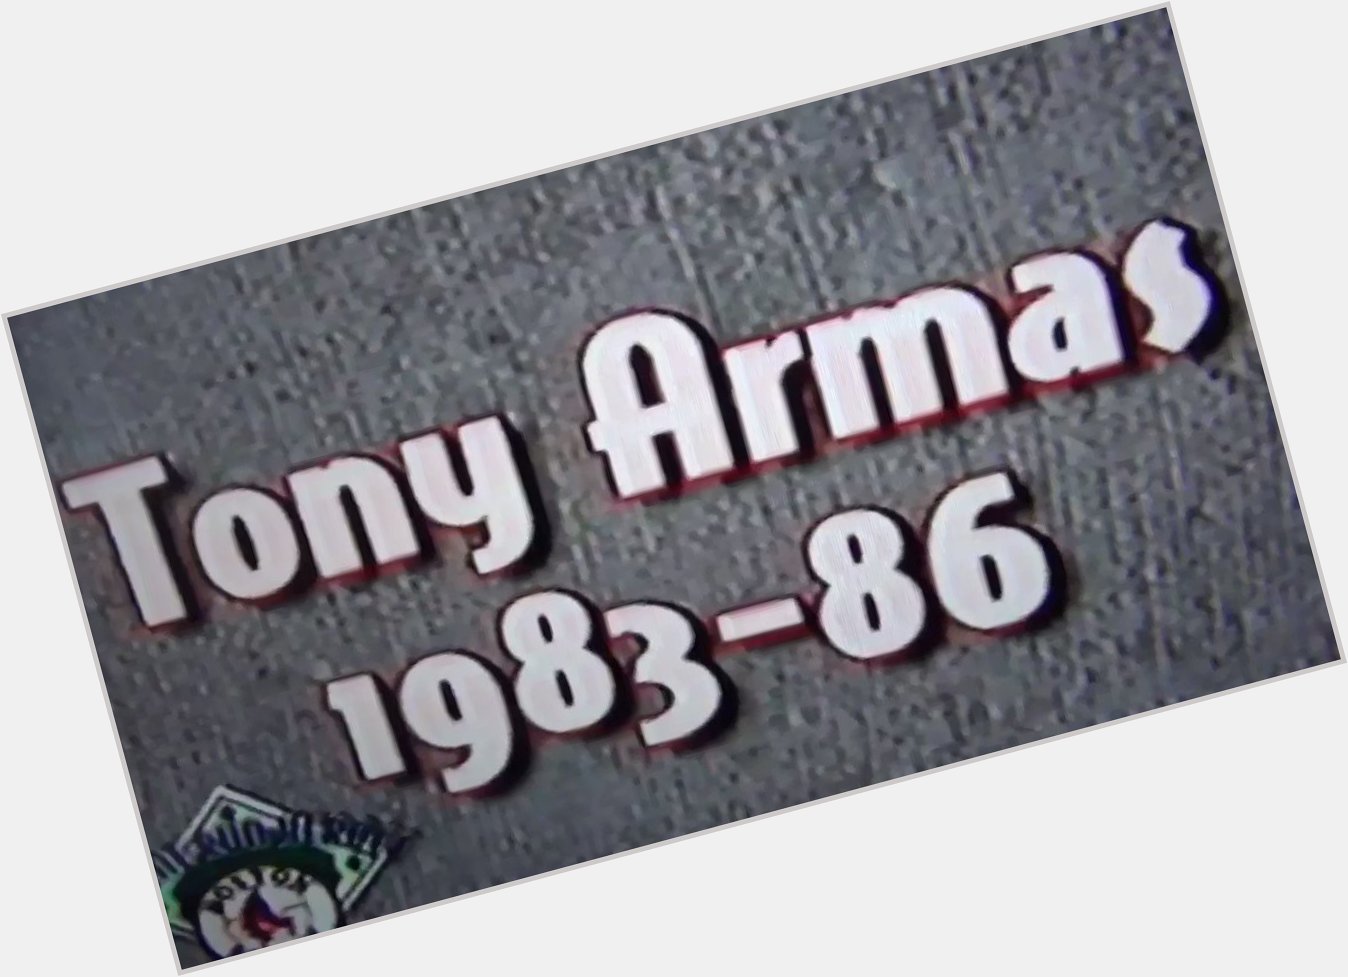 Happy birthday Tony Armas! Say what you want. Dude could rake. 